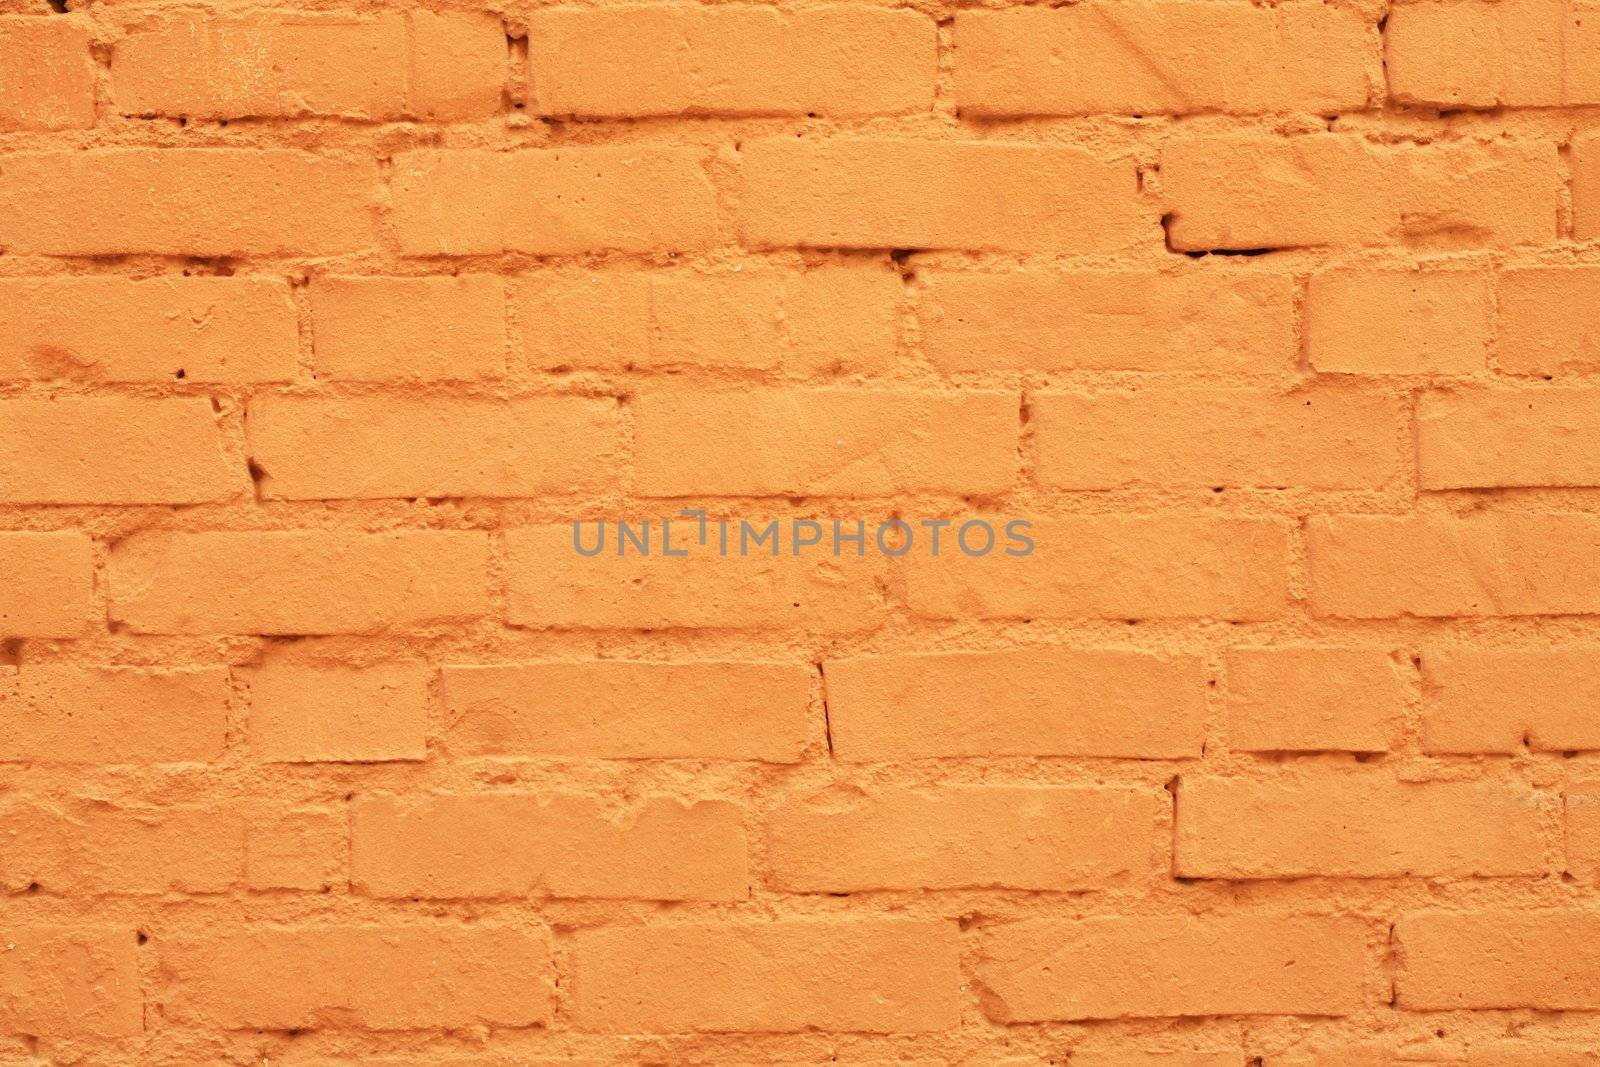 A Brick wall painted orange